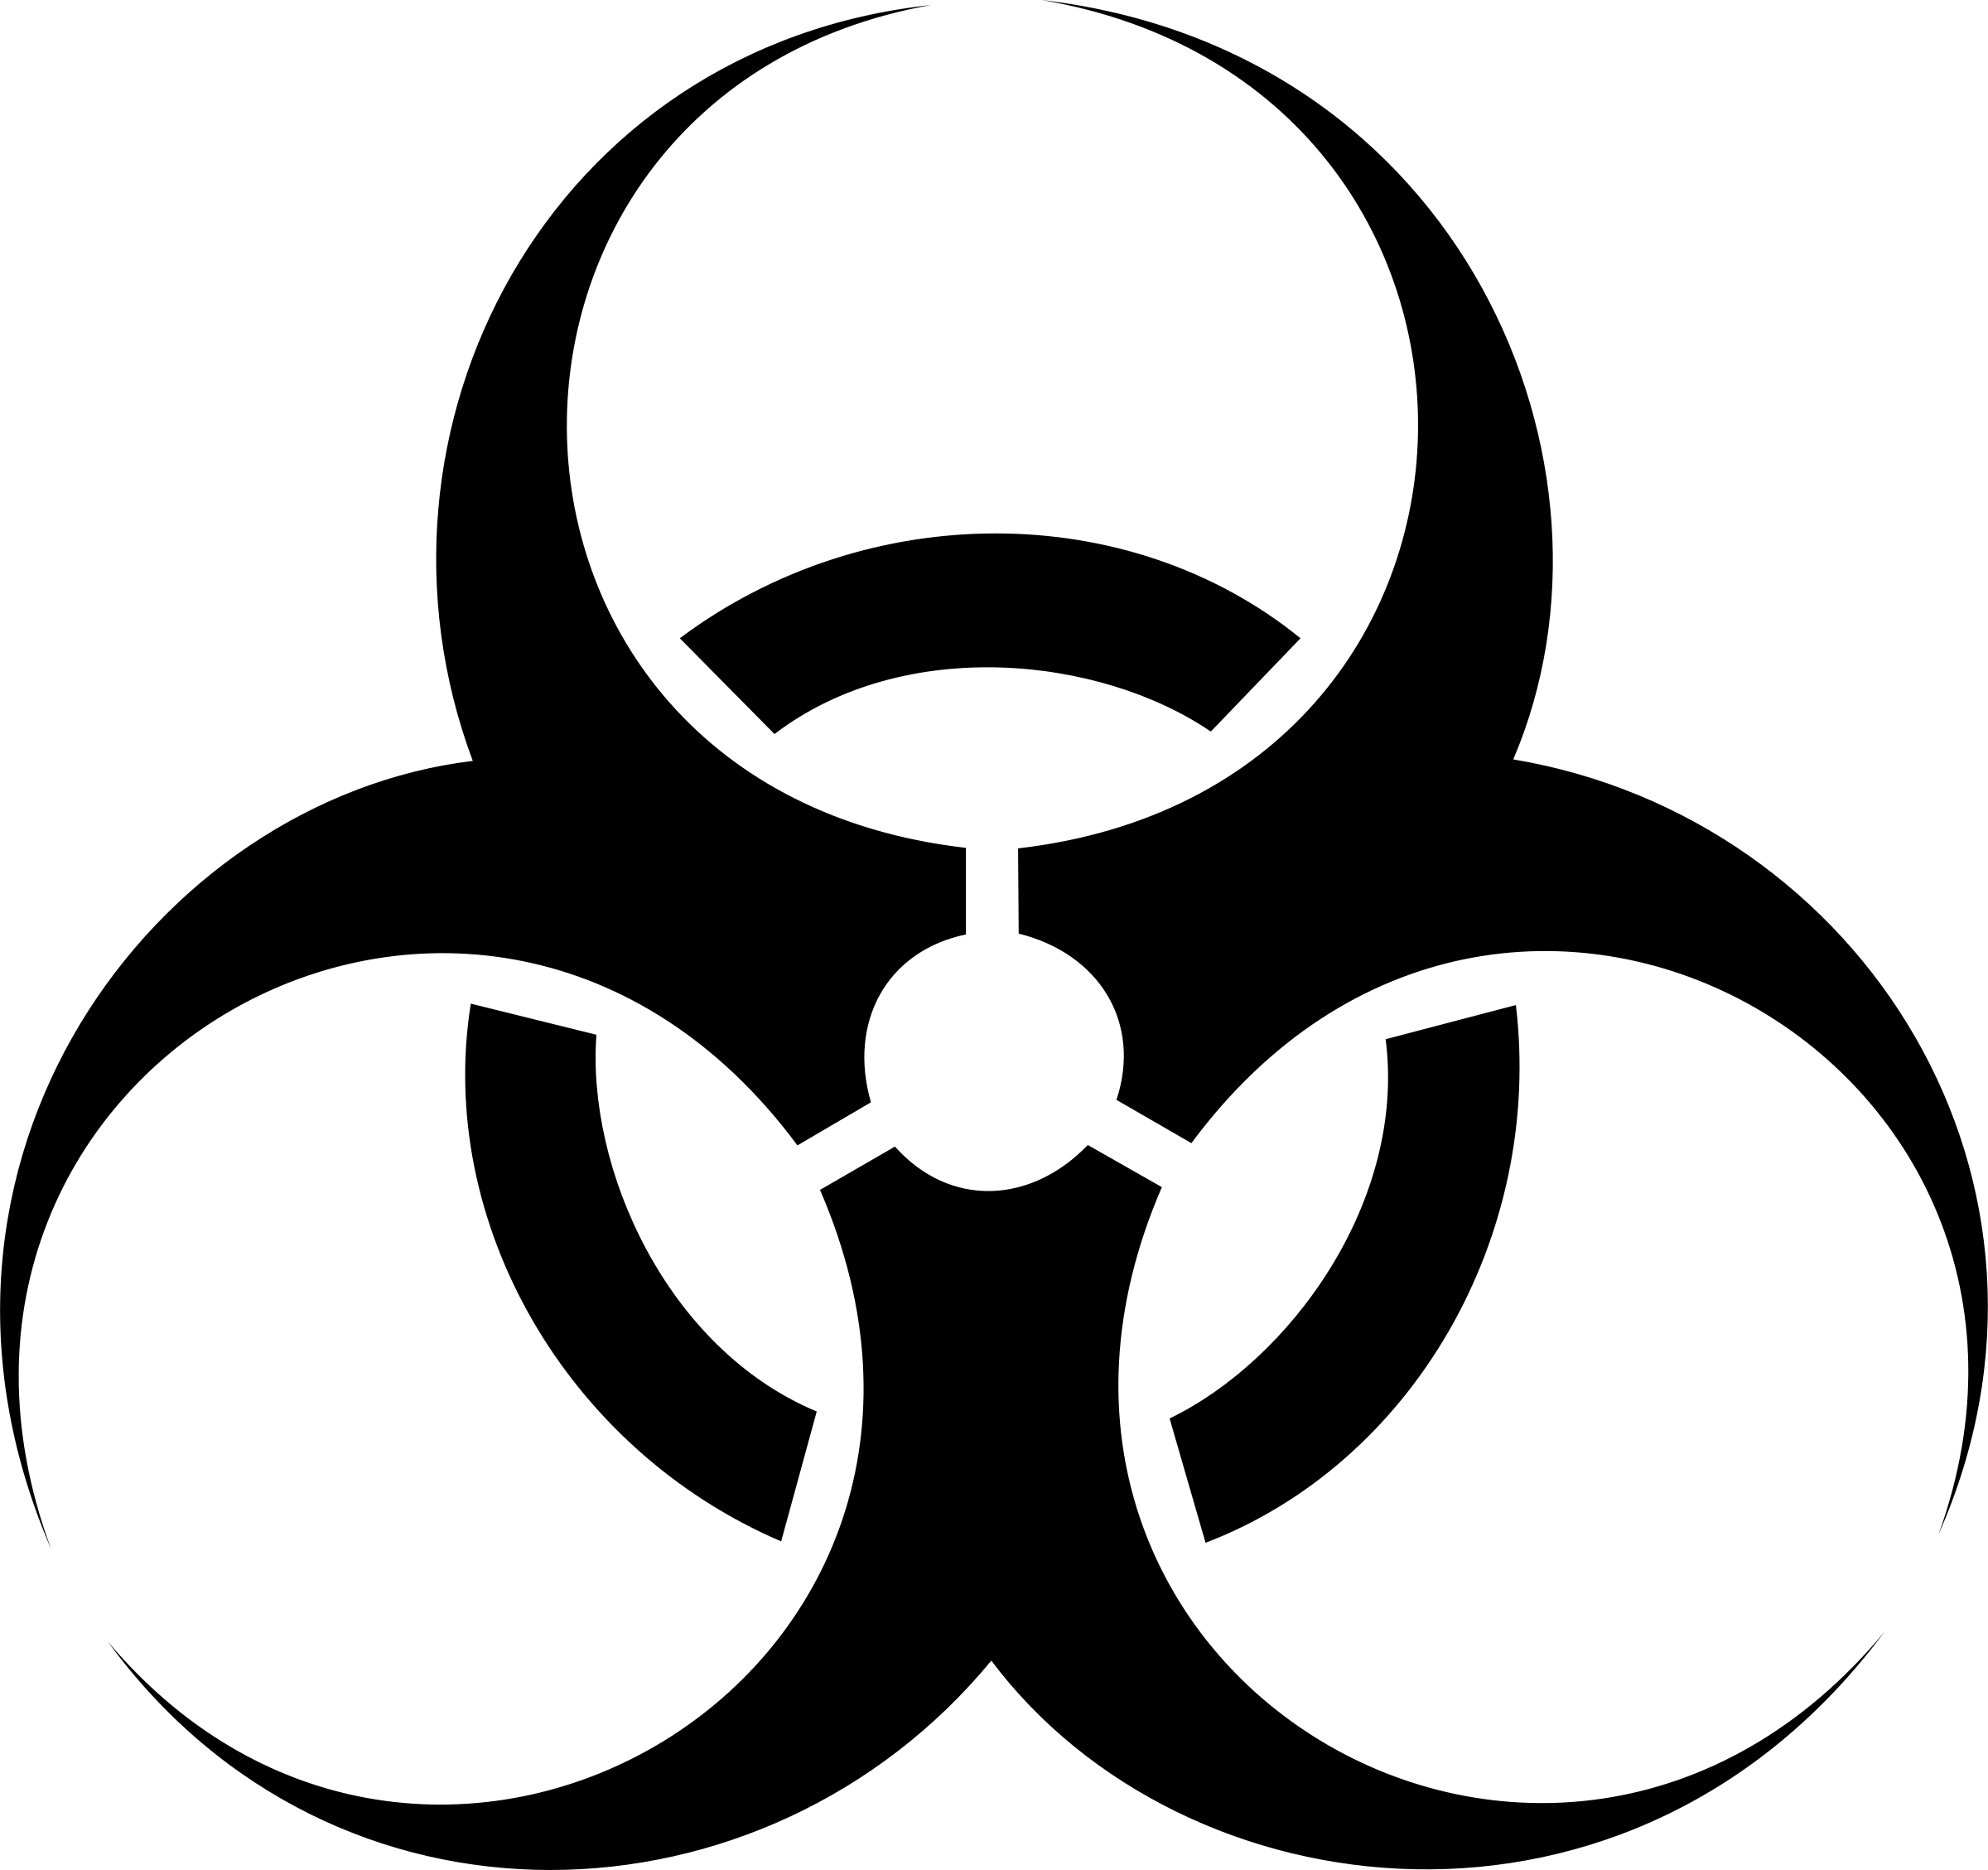 Biohazard Logo - Free Biohazard Symbol, Download Free Clip Art, Free Clip Art